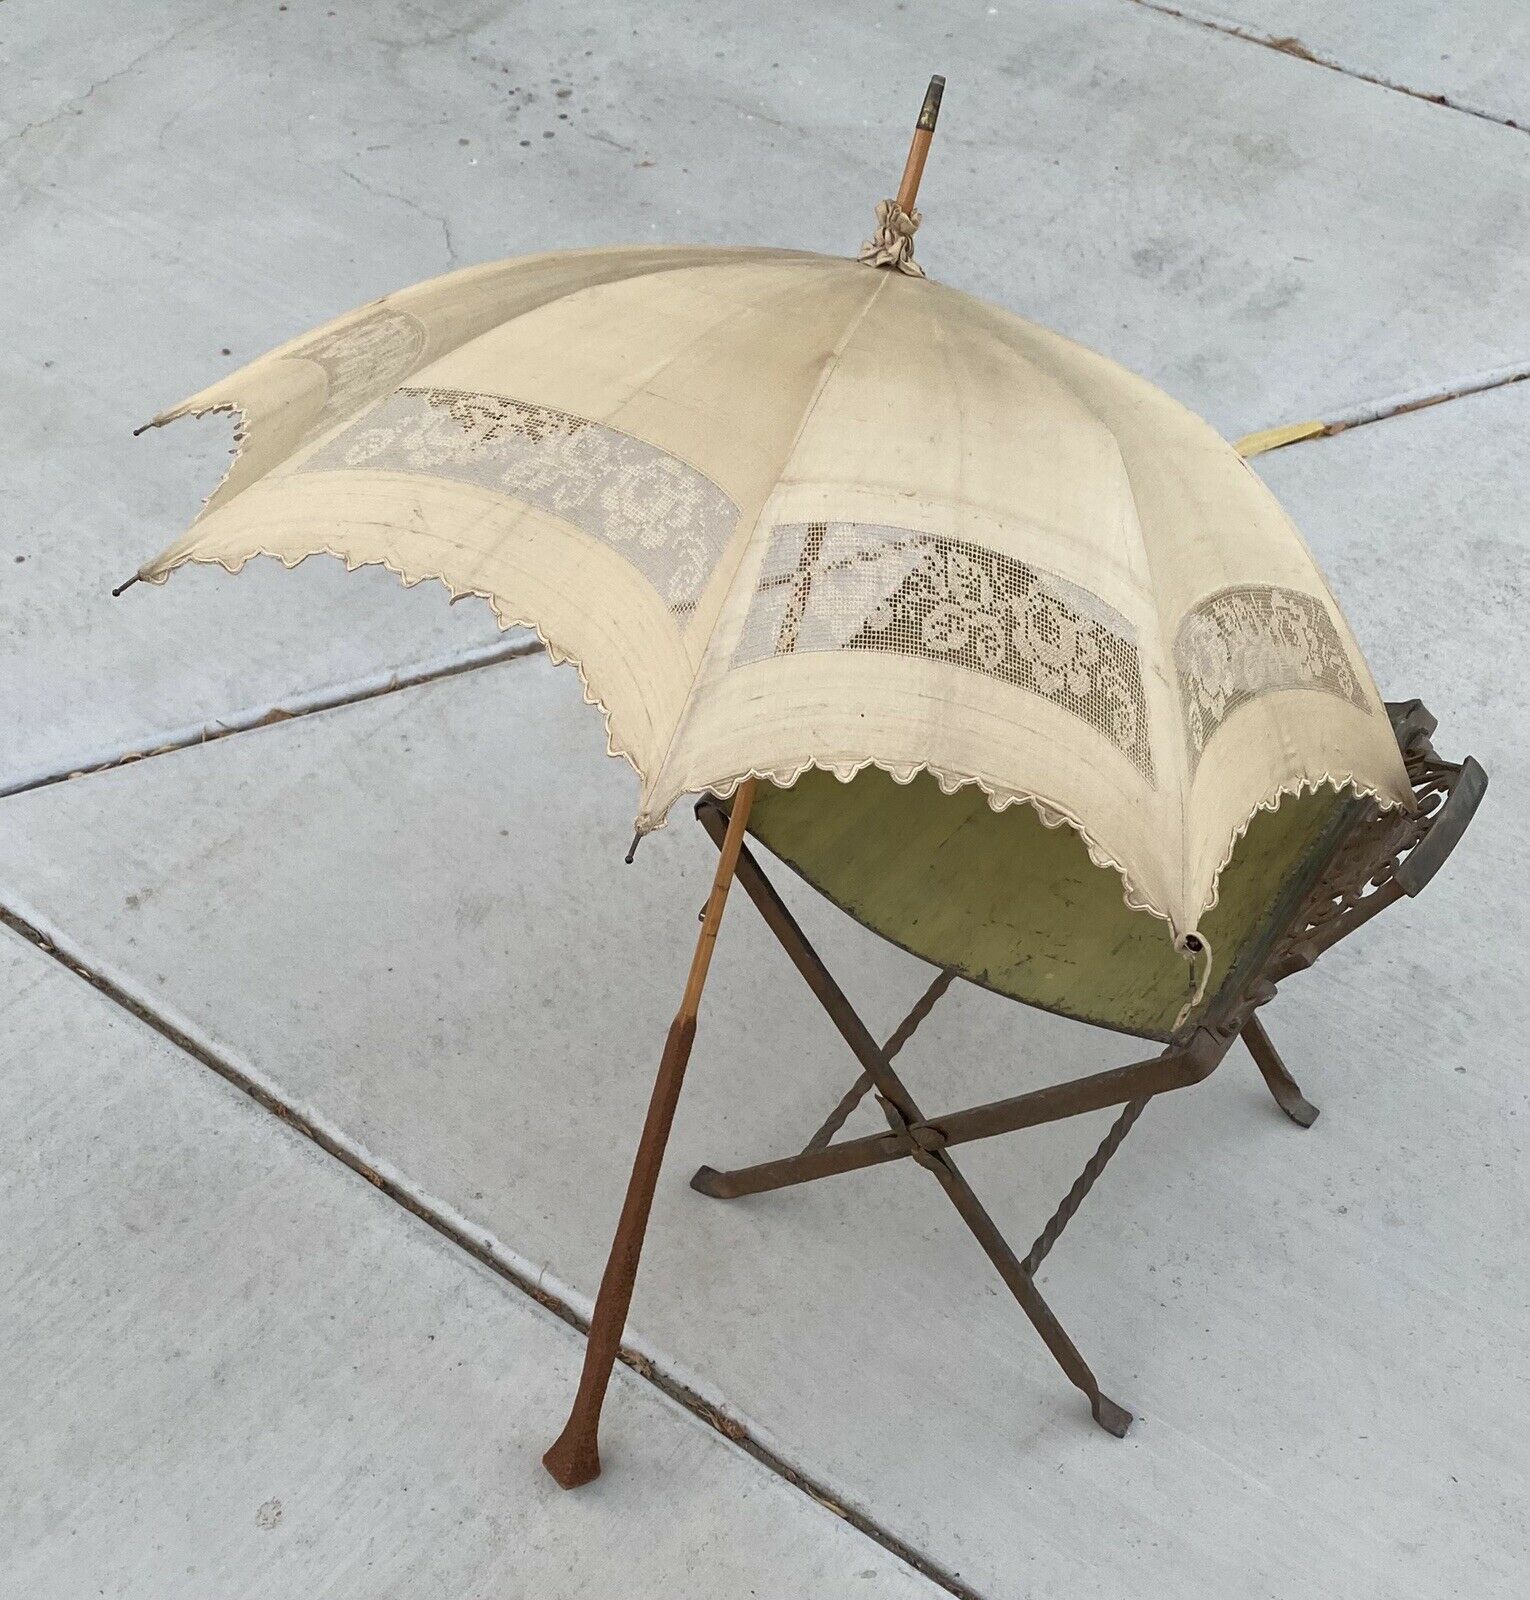 Antique Victorian Lace Parasol Umbrella Wood Handle 40 1/2 Inches Long Beautiful